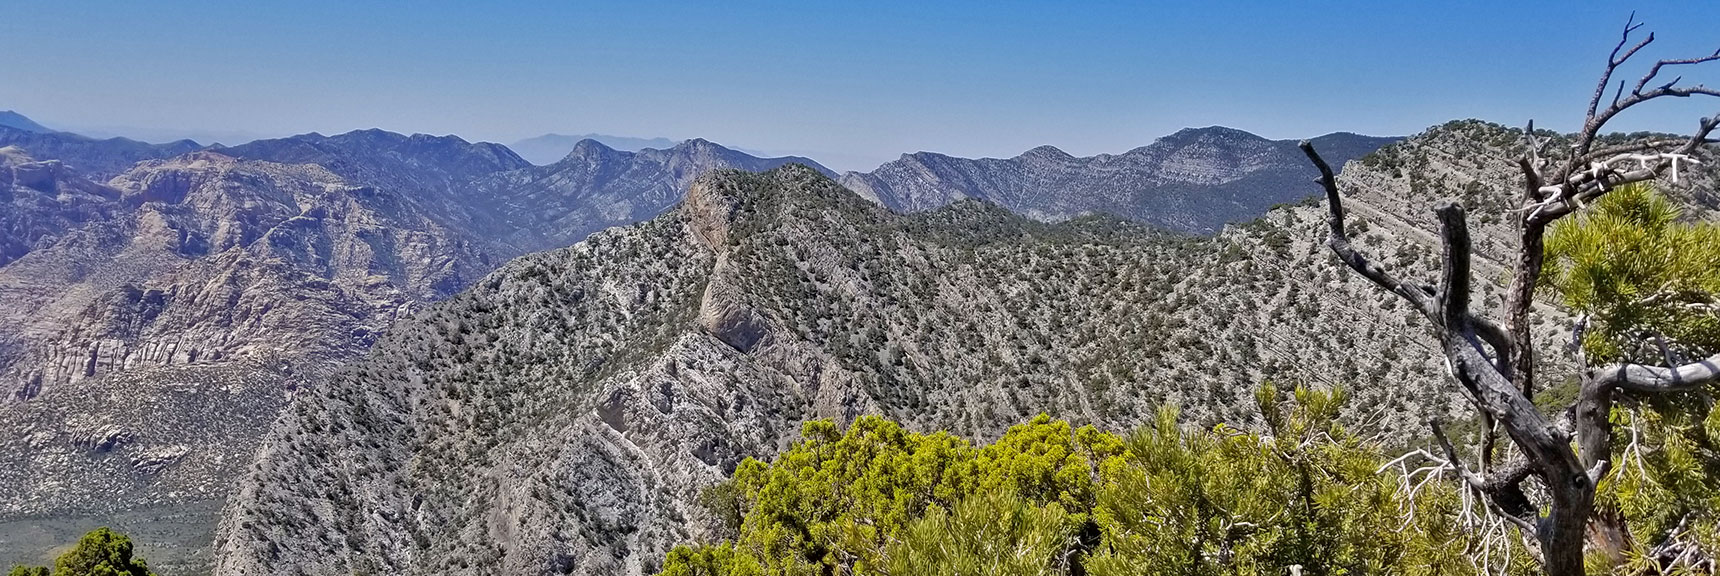 Keystone Thrust Looking West from Near El Padre Mountain, La Madre Mountains Wilderness, Nevada